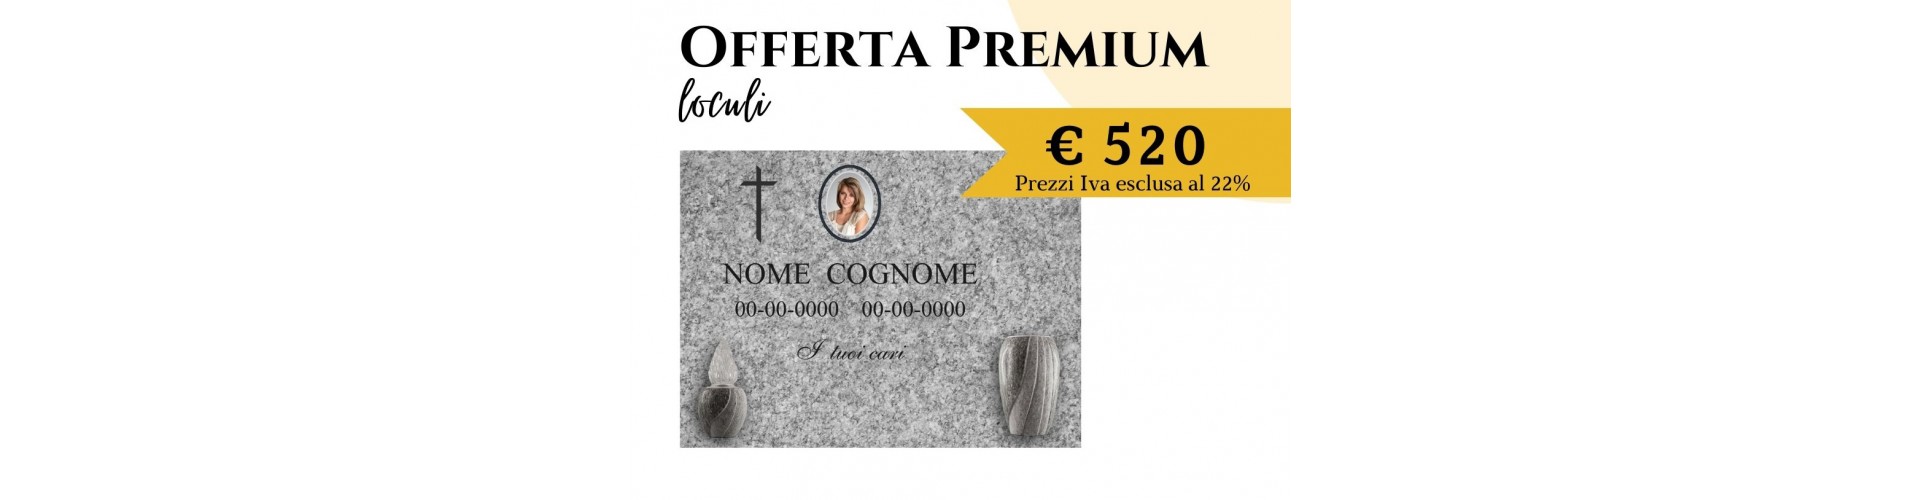 new! offerta premium